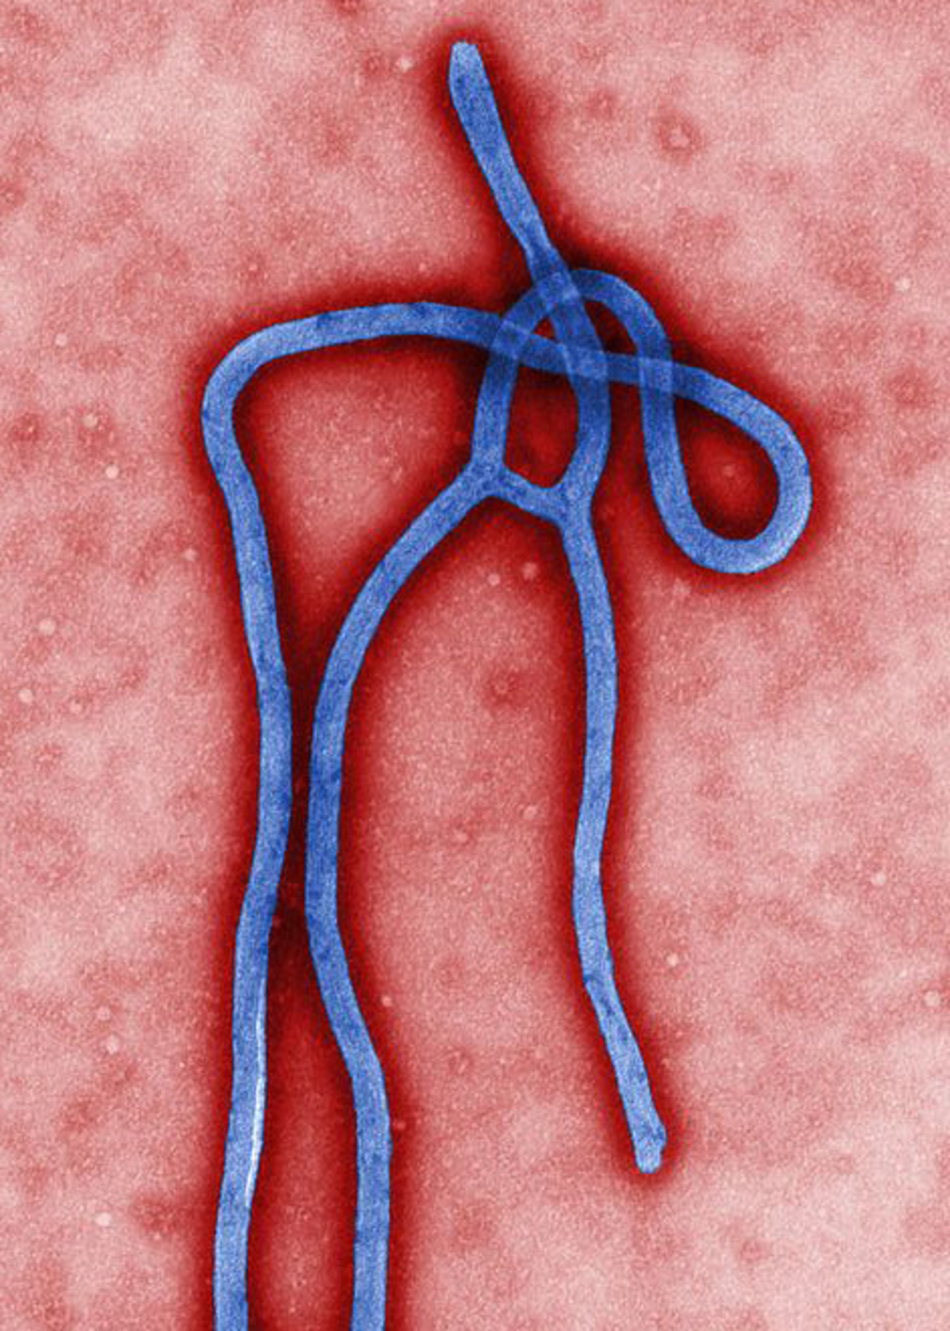 A Universal Drug Target for Preventing Ebola